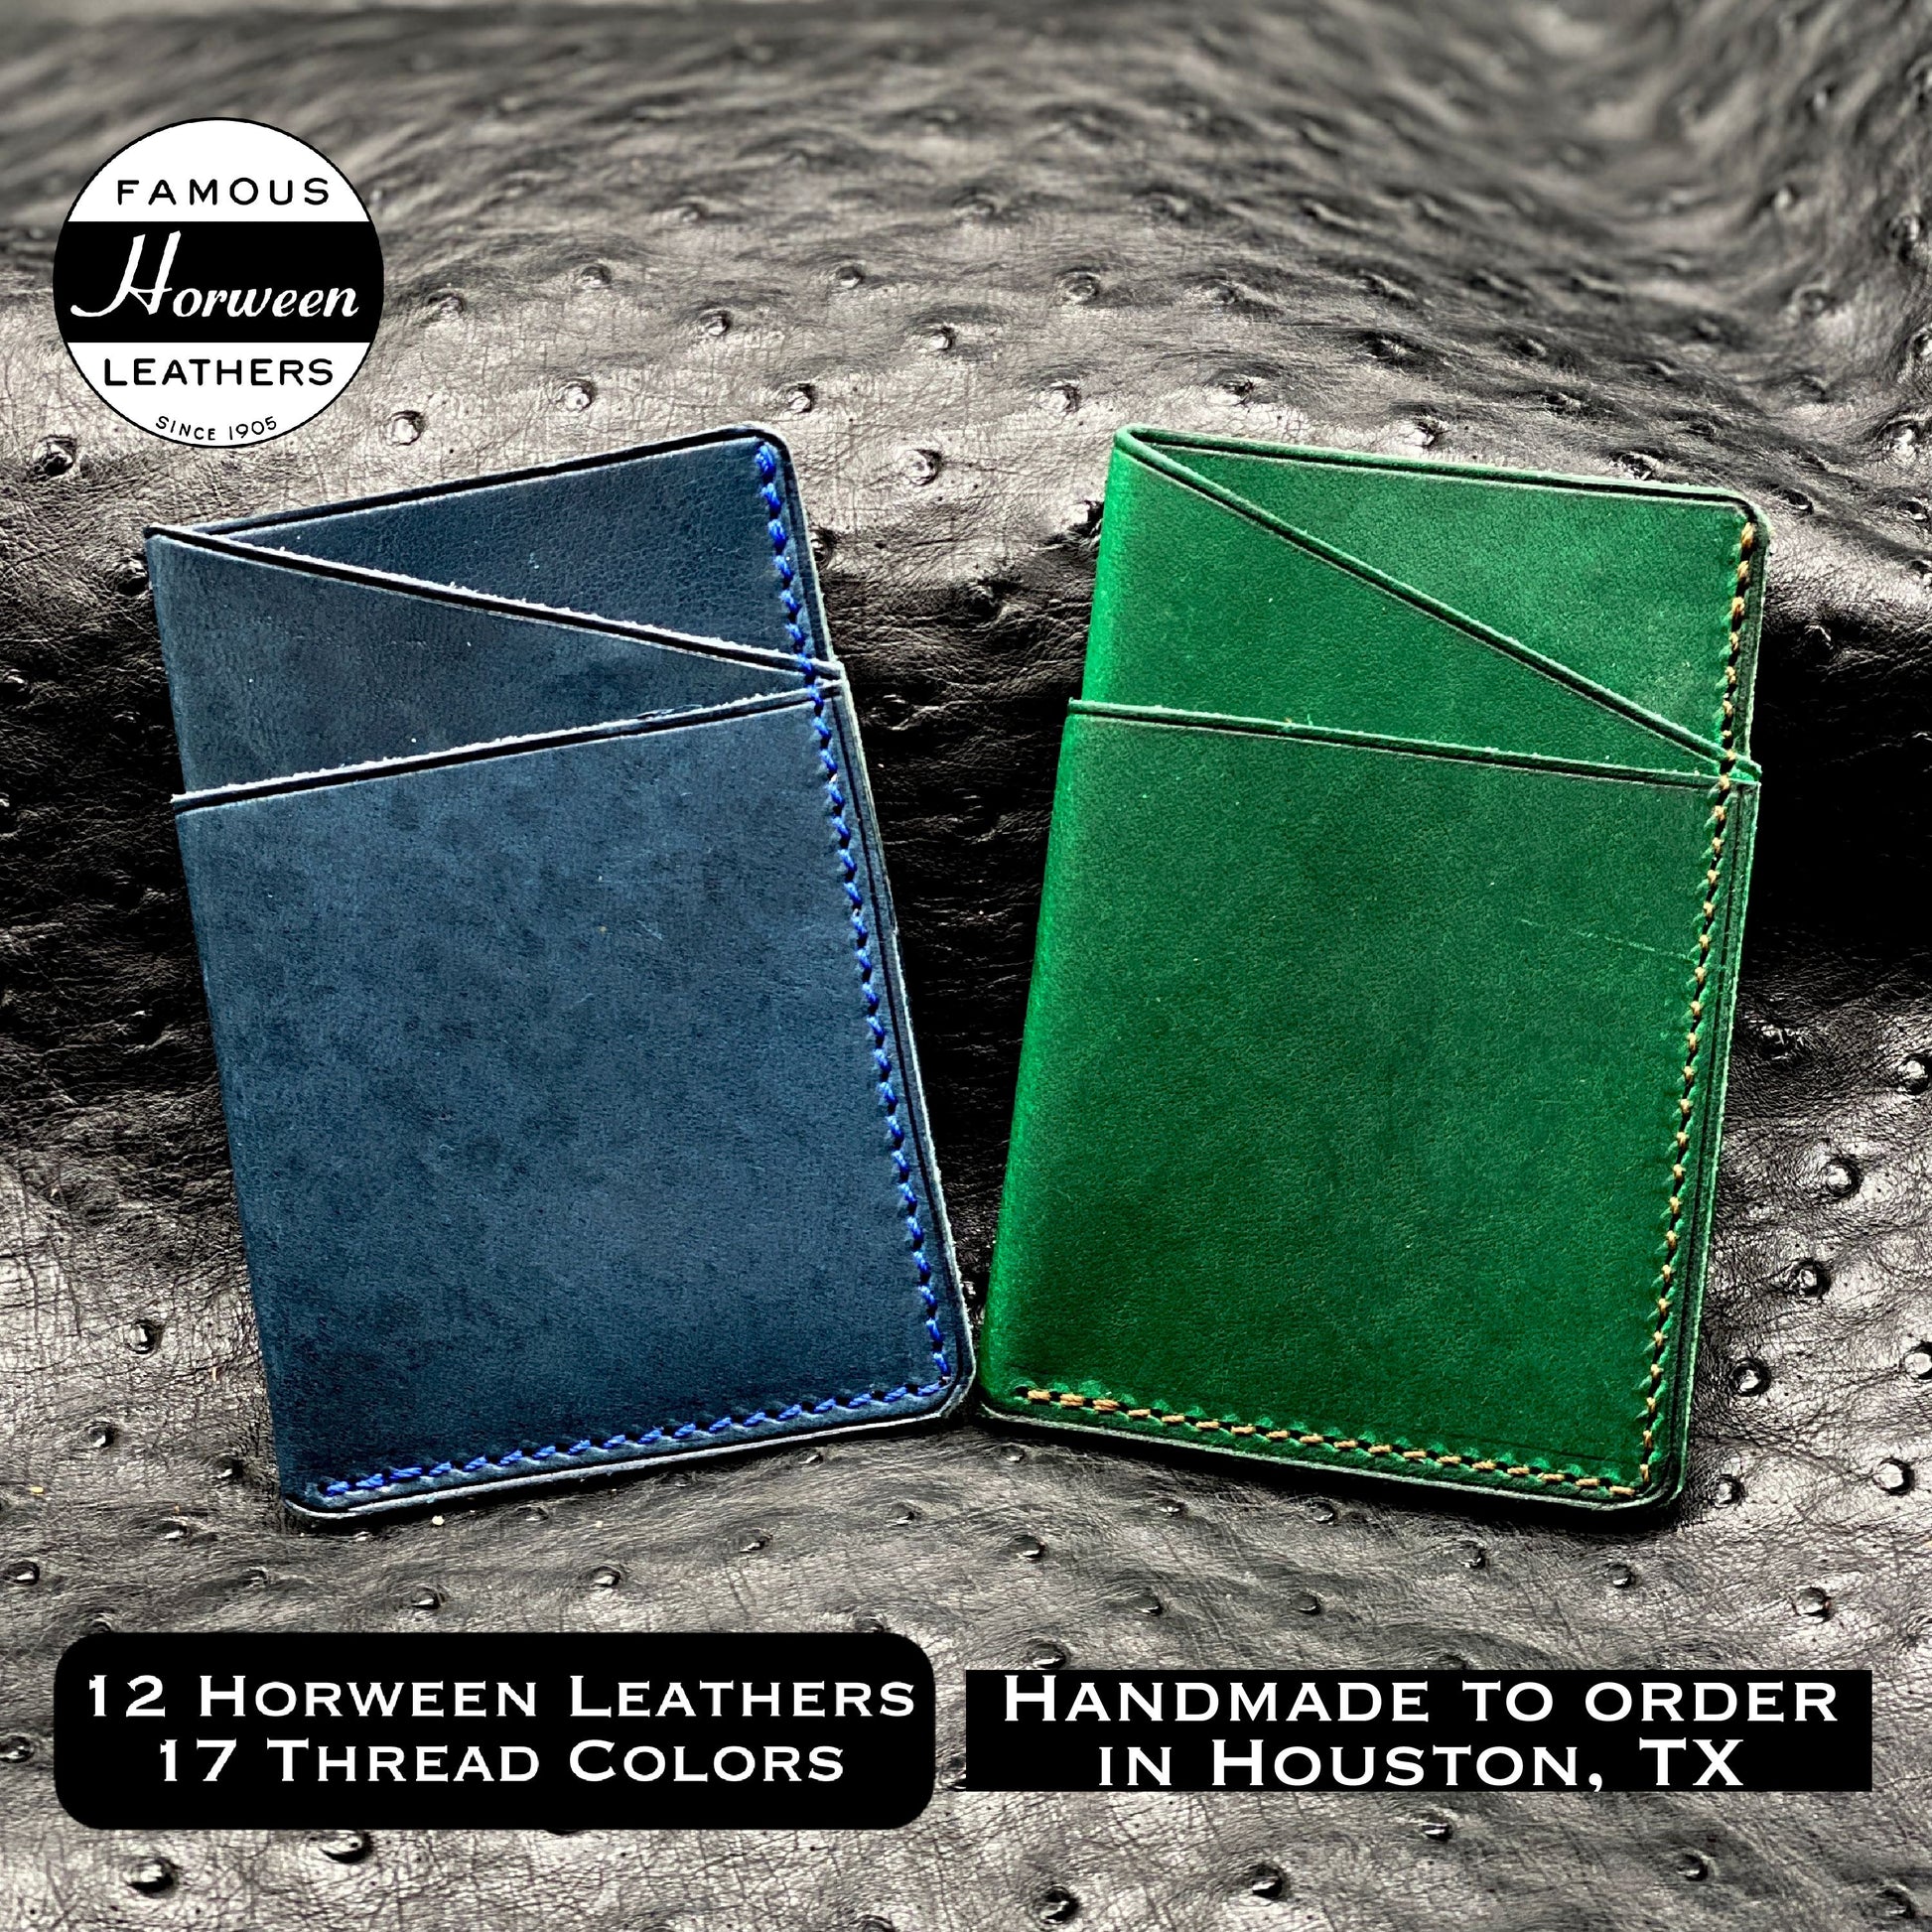 Cobalt Blue and Golf Green Horween Leather Custom EDC3 Minimalist Wallet | Handmade Compact EDC Small Mini Wallet by Custom Leather and Pen in Houston, TX